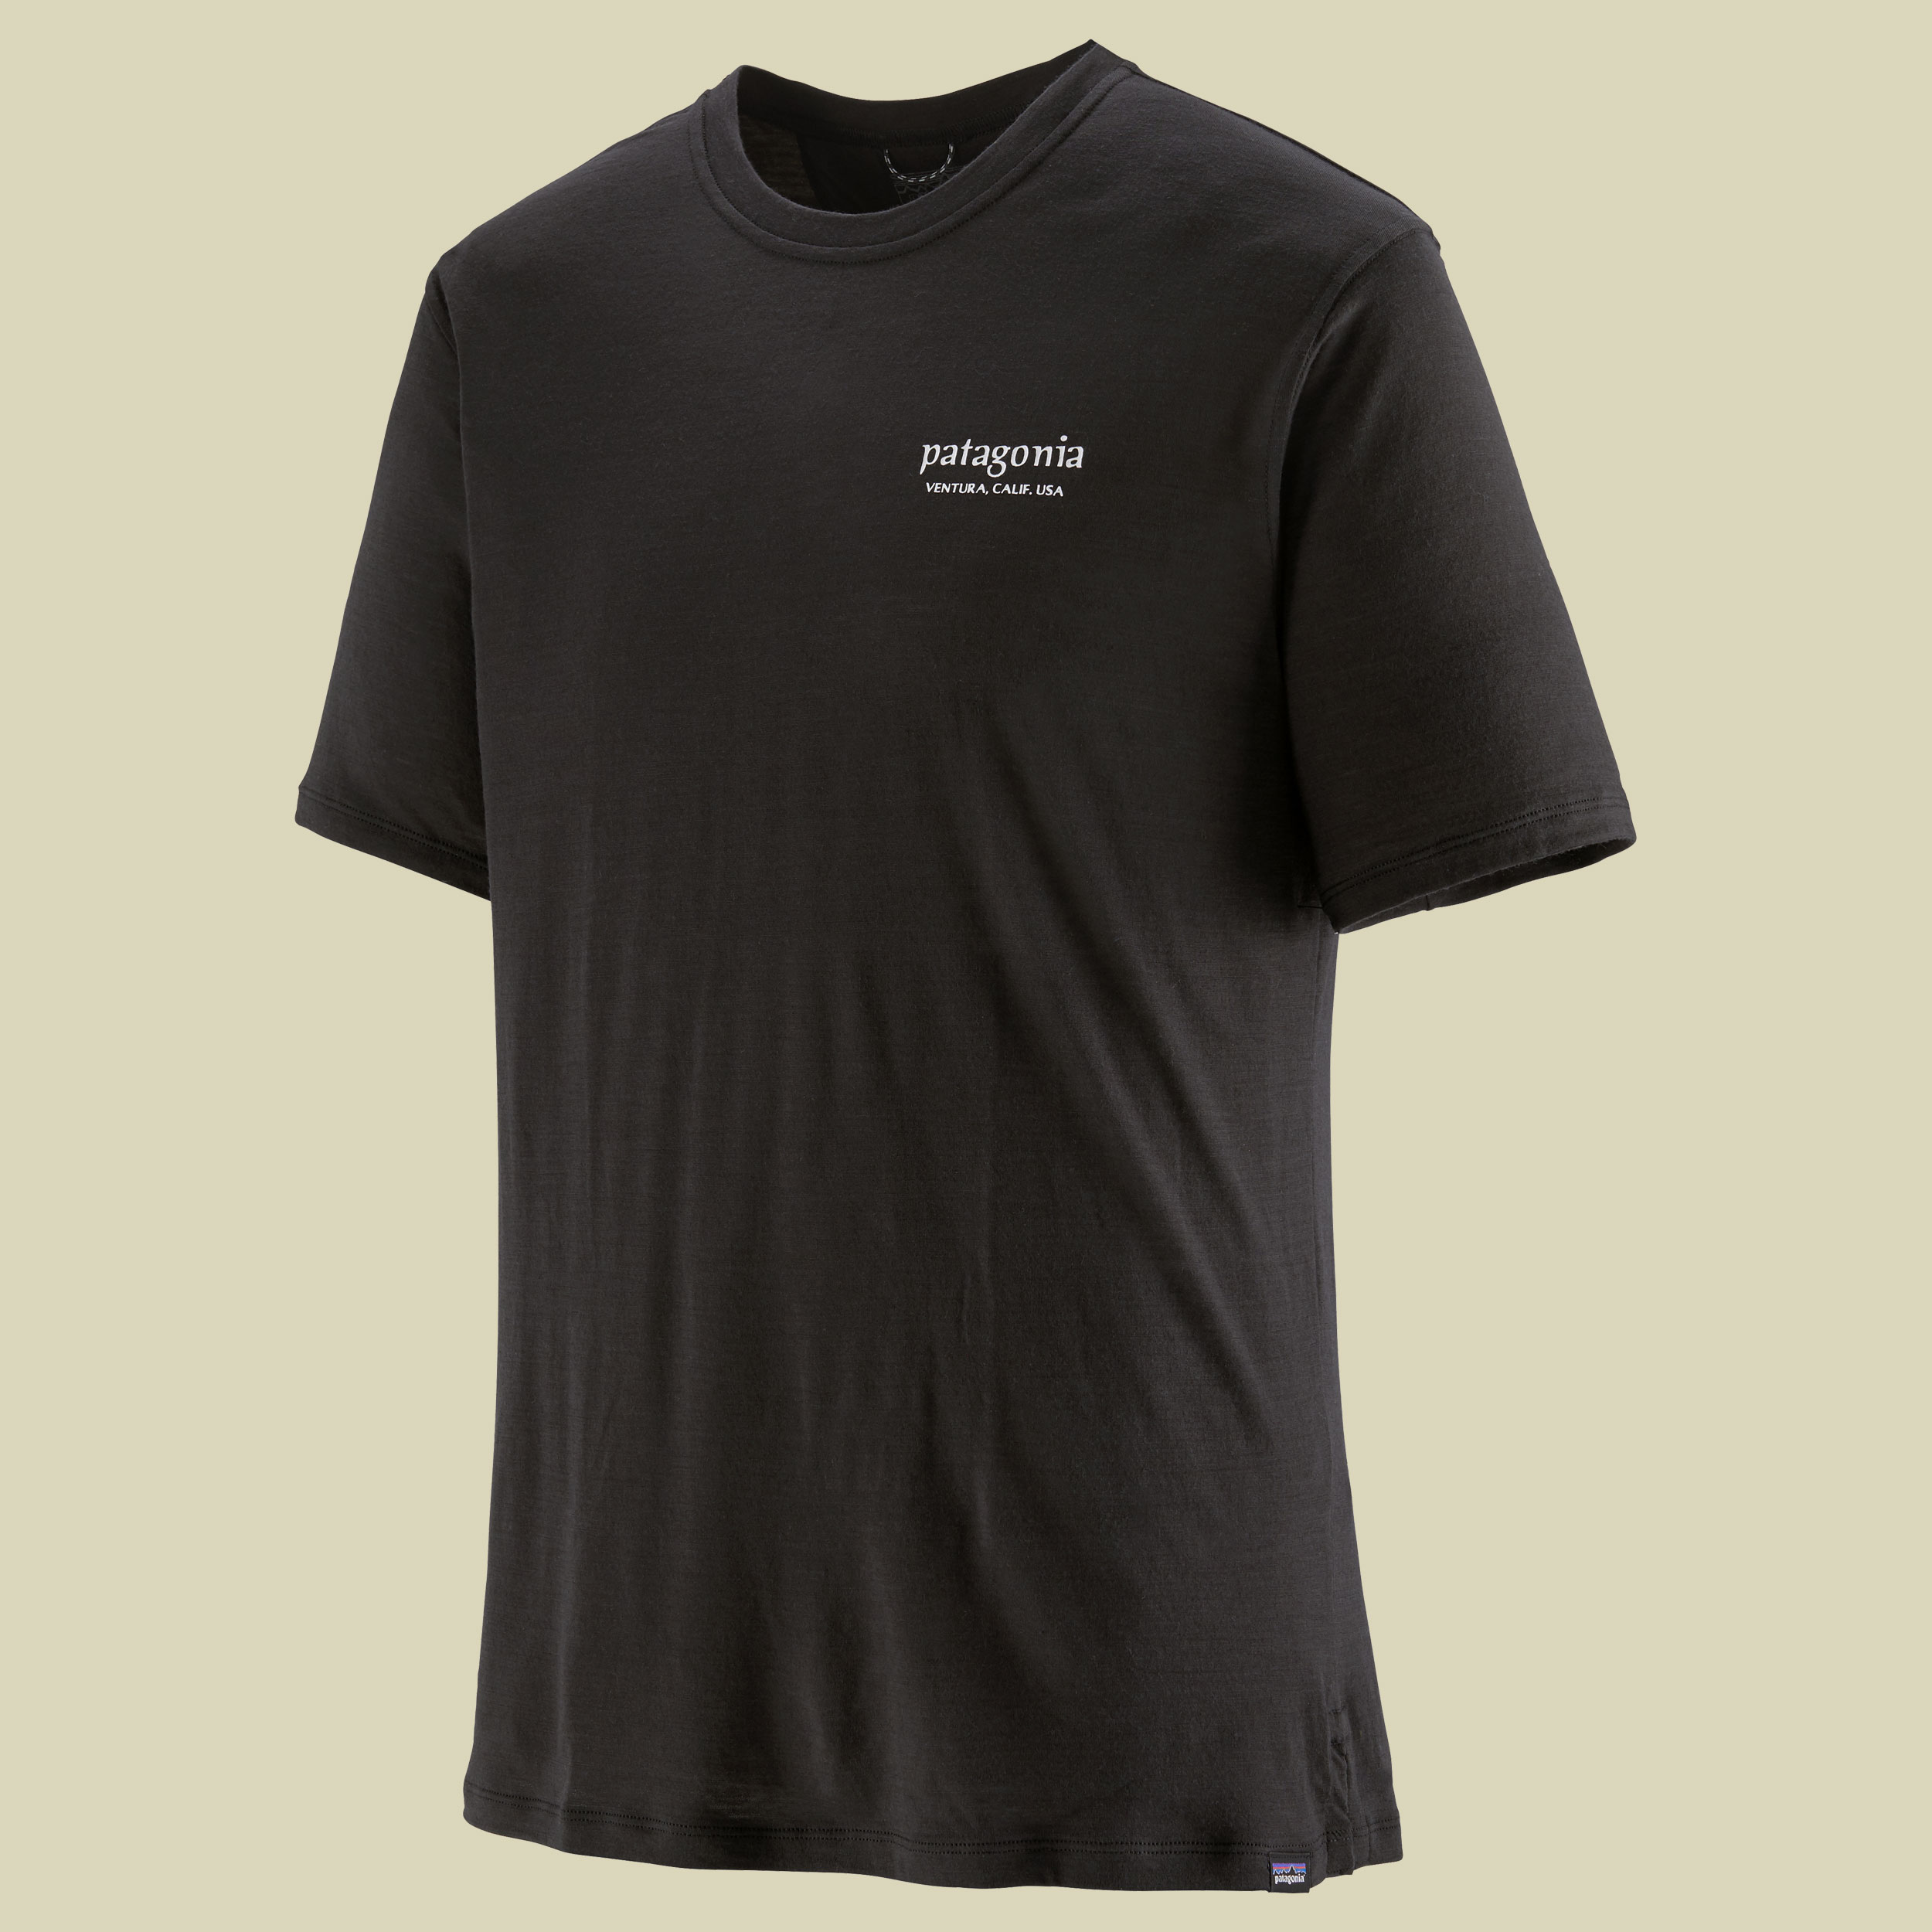 Cap Cool Merino Blend Graphic Shirt Men L schwarz - heritage header:black